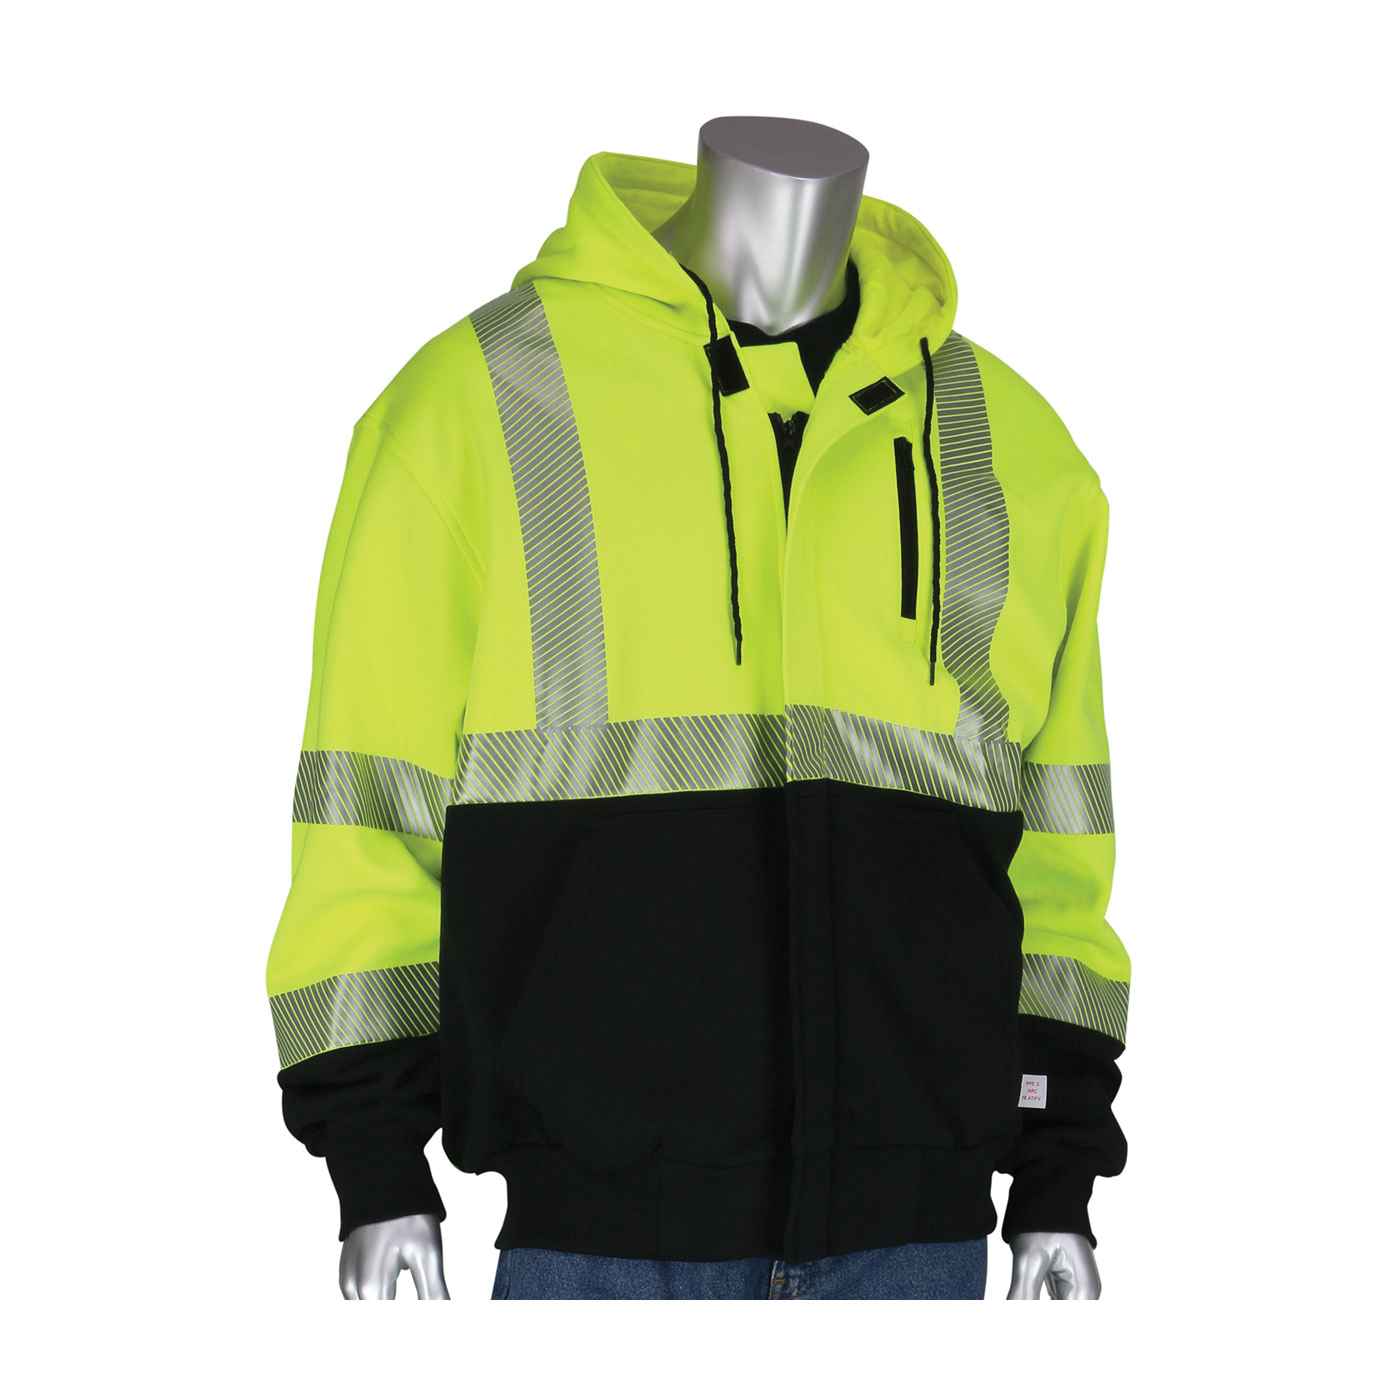 PIP® 385-1370FR-LY/M 385-1370FR Arc and Flame Resistant Hooded Sweatshirt With Black Bottom, Unisex, M, Hi-Viz Yellow/Black, 60% Modacrylic/40% Cotton, 29 in L